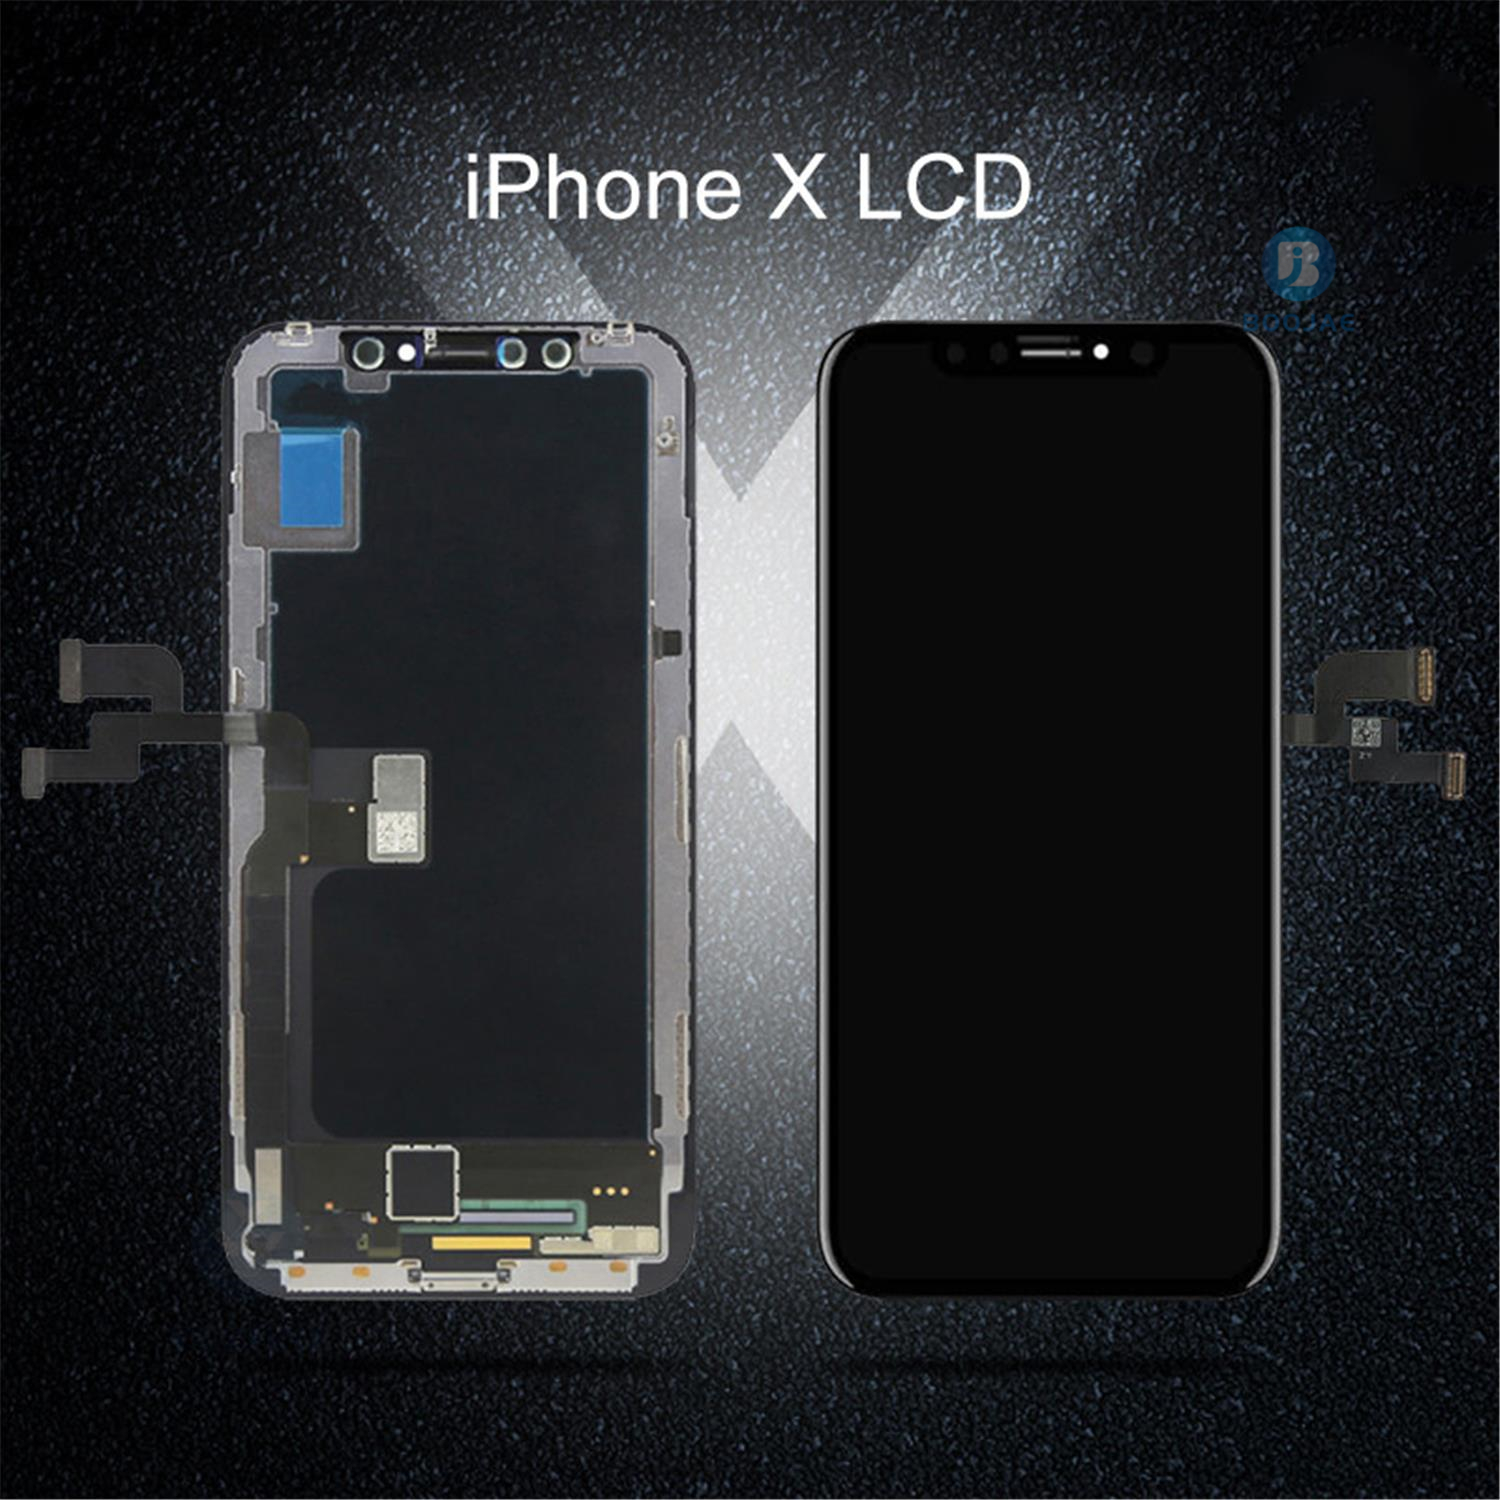 iPhone X LCD, iPhone Screen Wholesale China | BOOJAE